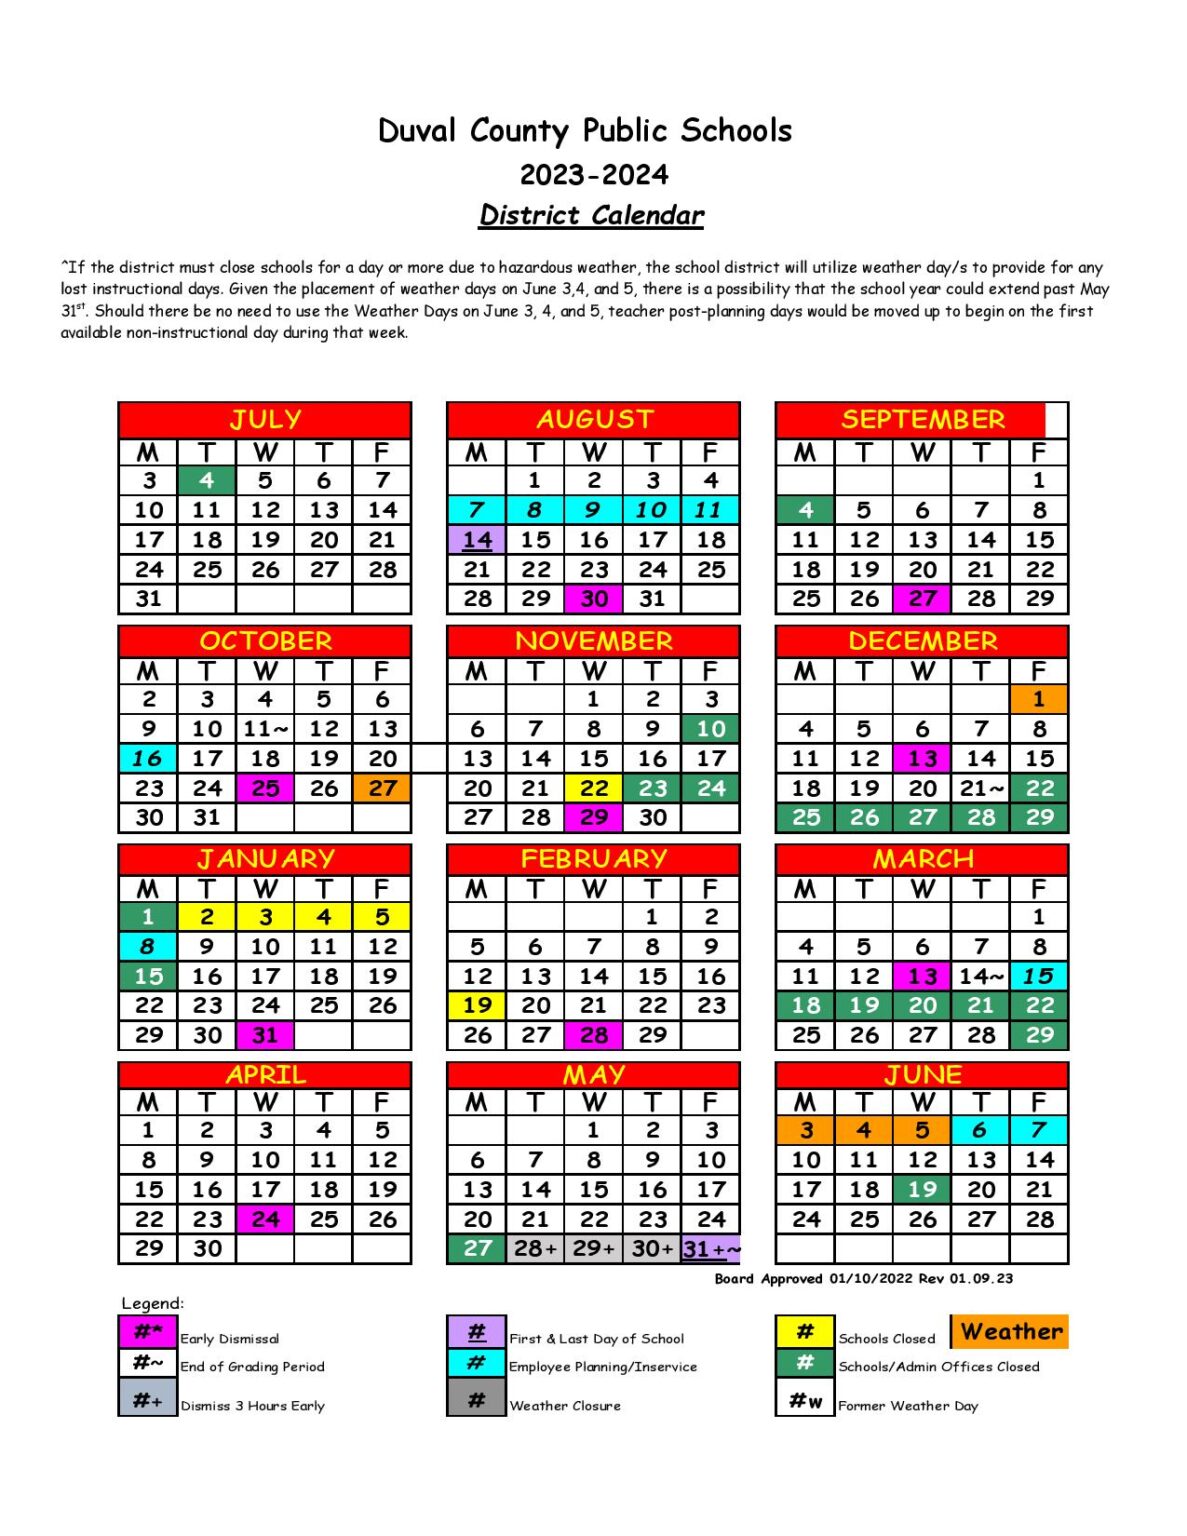 Duval County Public School Calendar 202425 Nelia